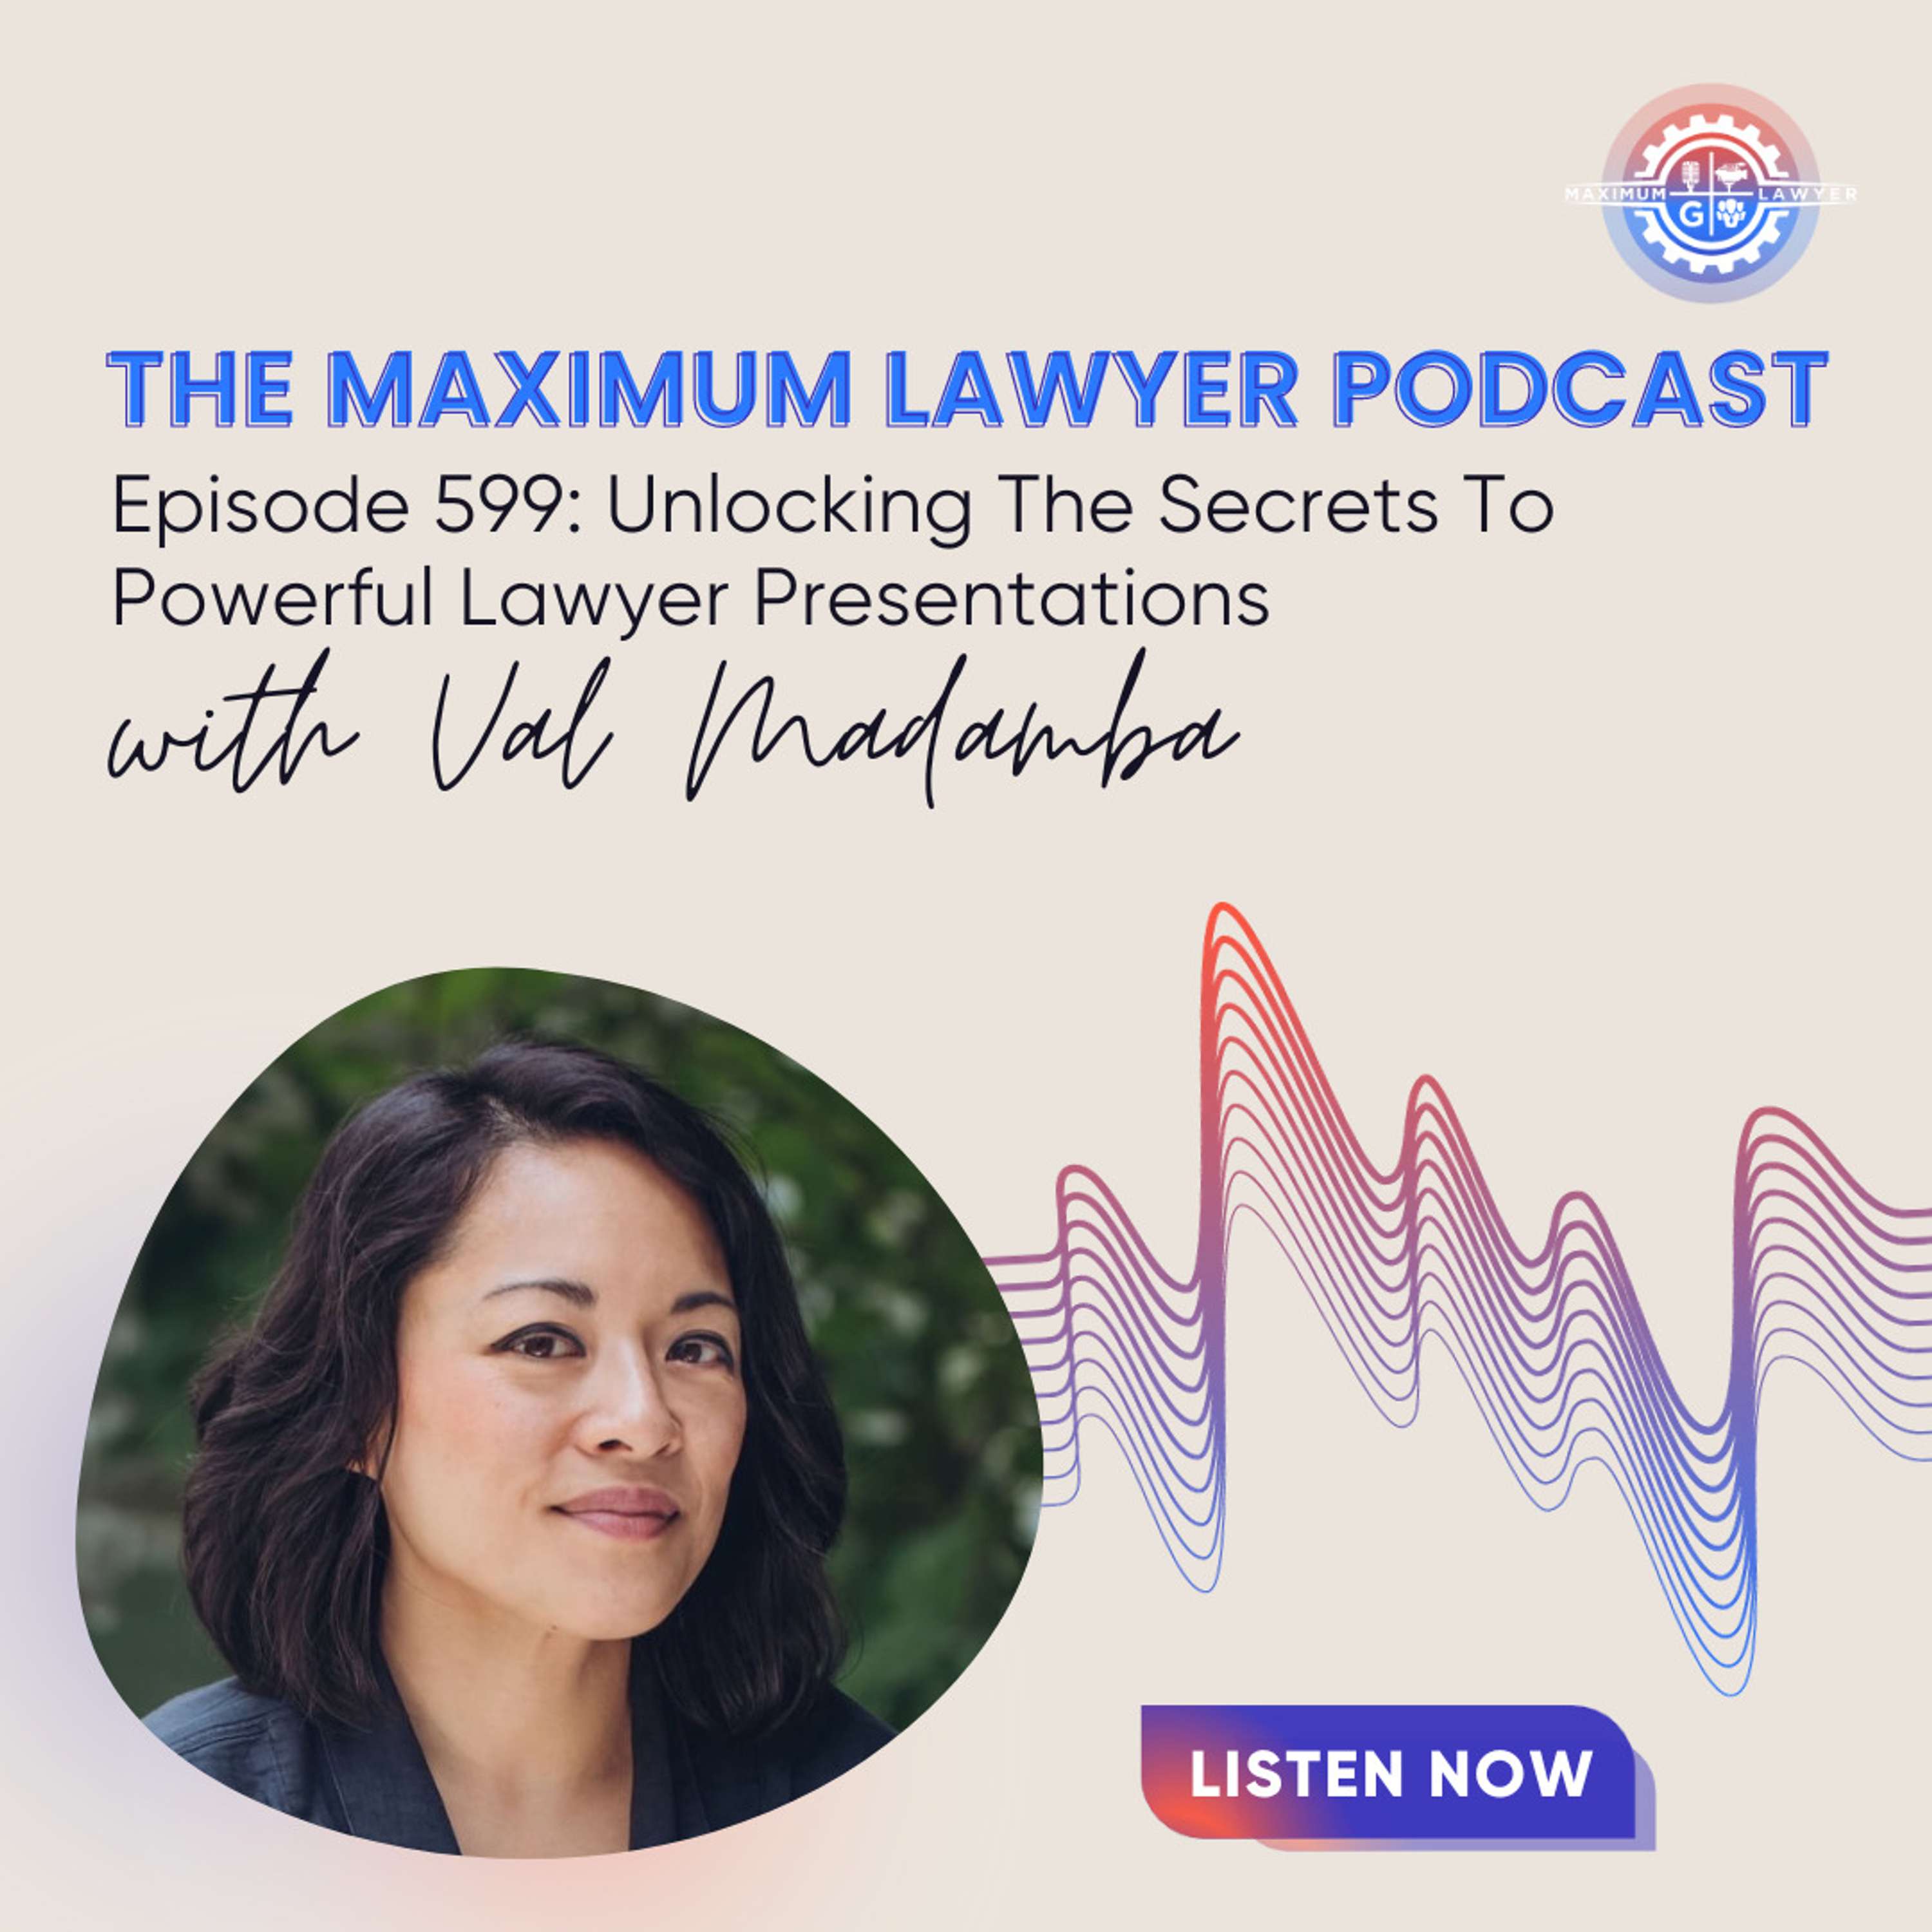 Unlocking The Secrets To Powerful Lawyer Presentations with Val Madamba